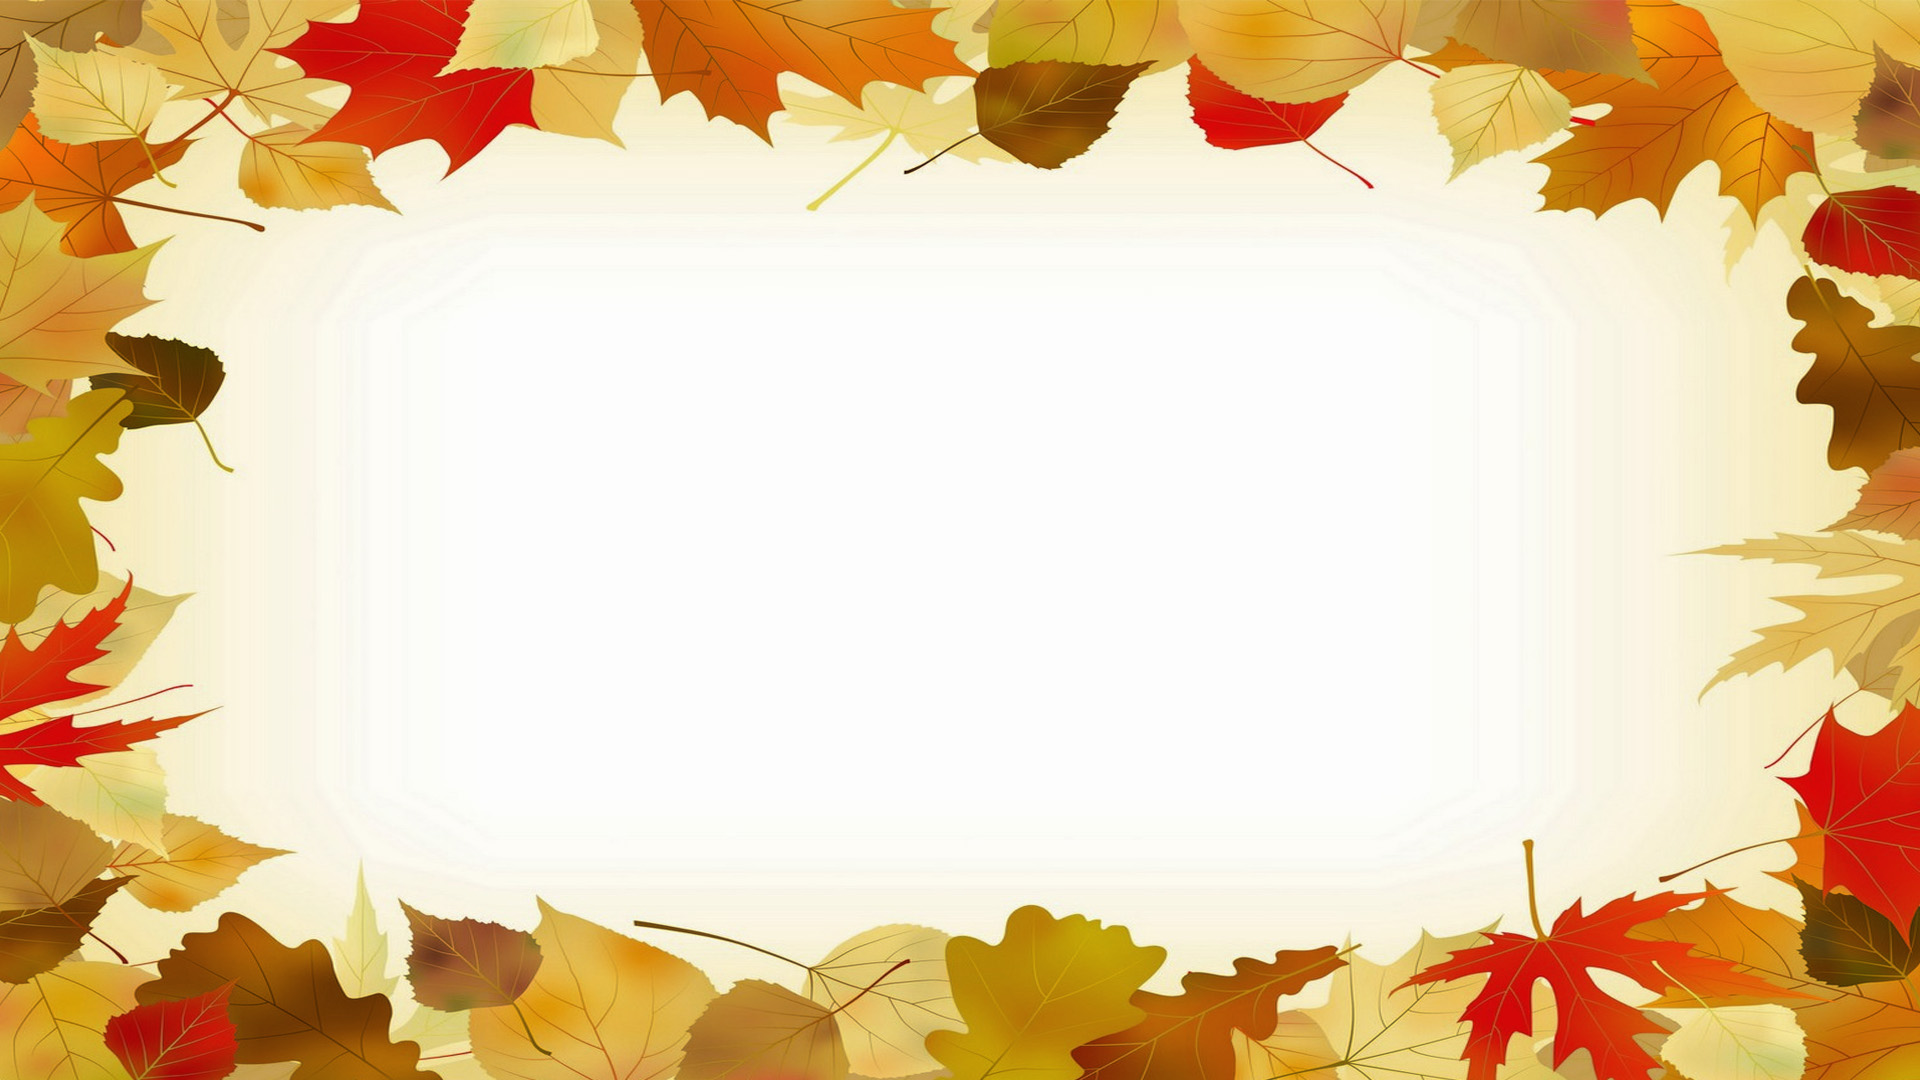 [70+] Fall Leaf Background | WallpaperSafari.com